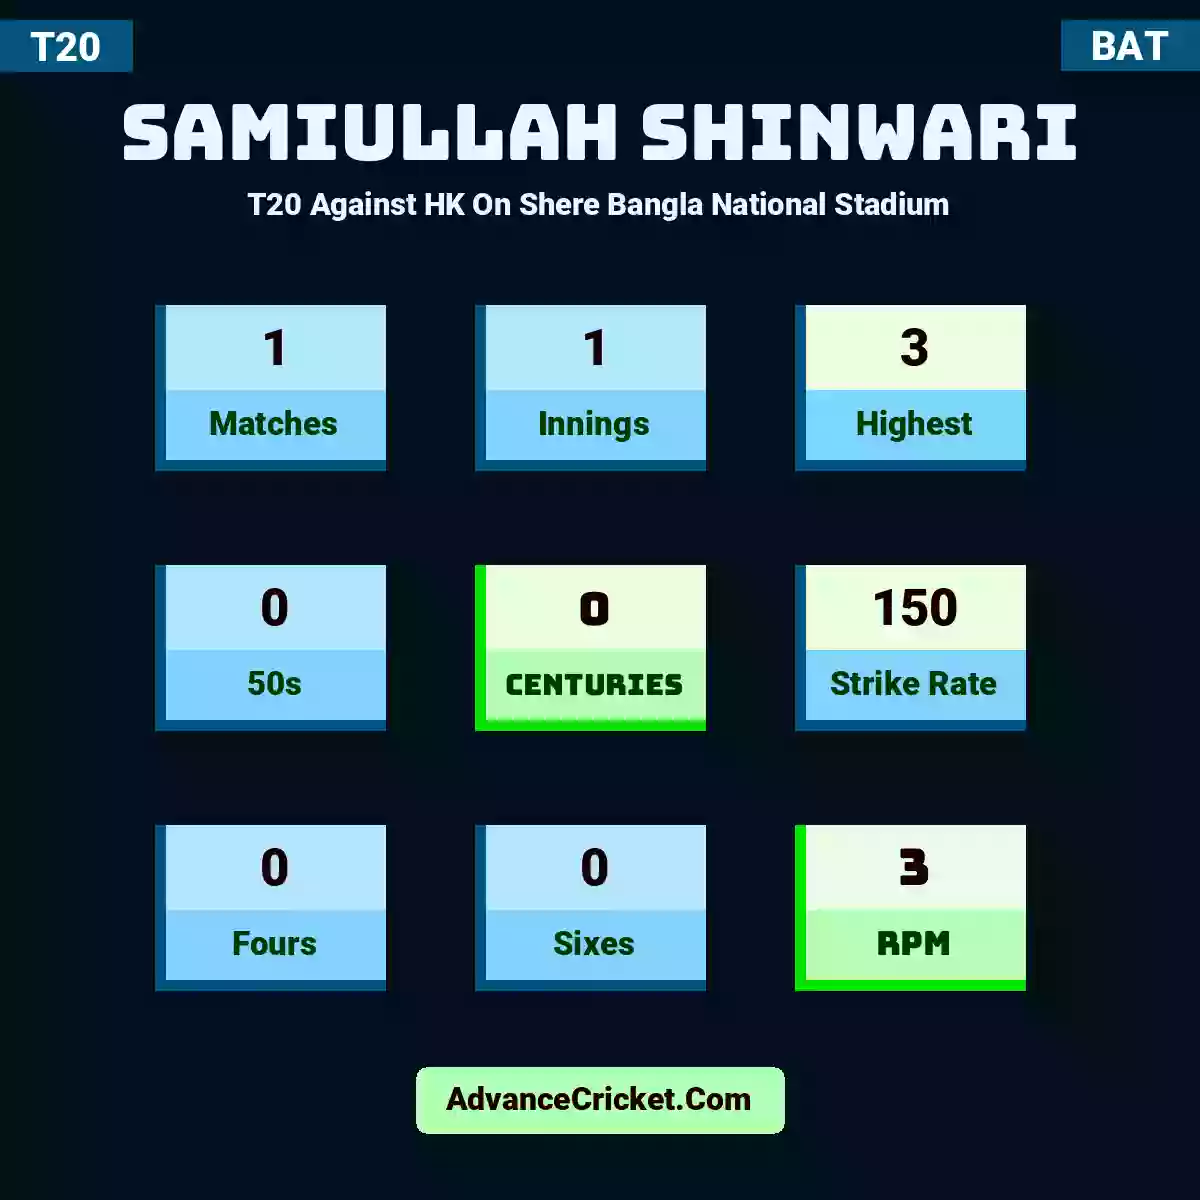 Samiullah Shinwari T20  Against HK On Shere Bangla National Stadium, Samiullah Shinwari played 1 matches, scored 3 runs as highest, 0 half-centuries, and 0 centuries, with a strike rate of 150. S.Shinwari hit 0 fours and 0 sixes, with an RPM of 3.